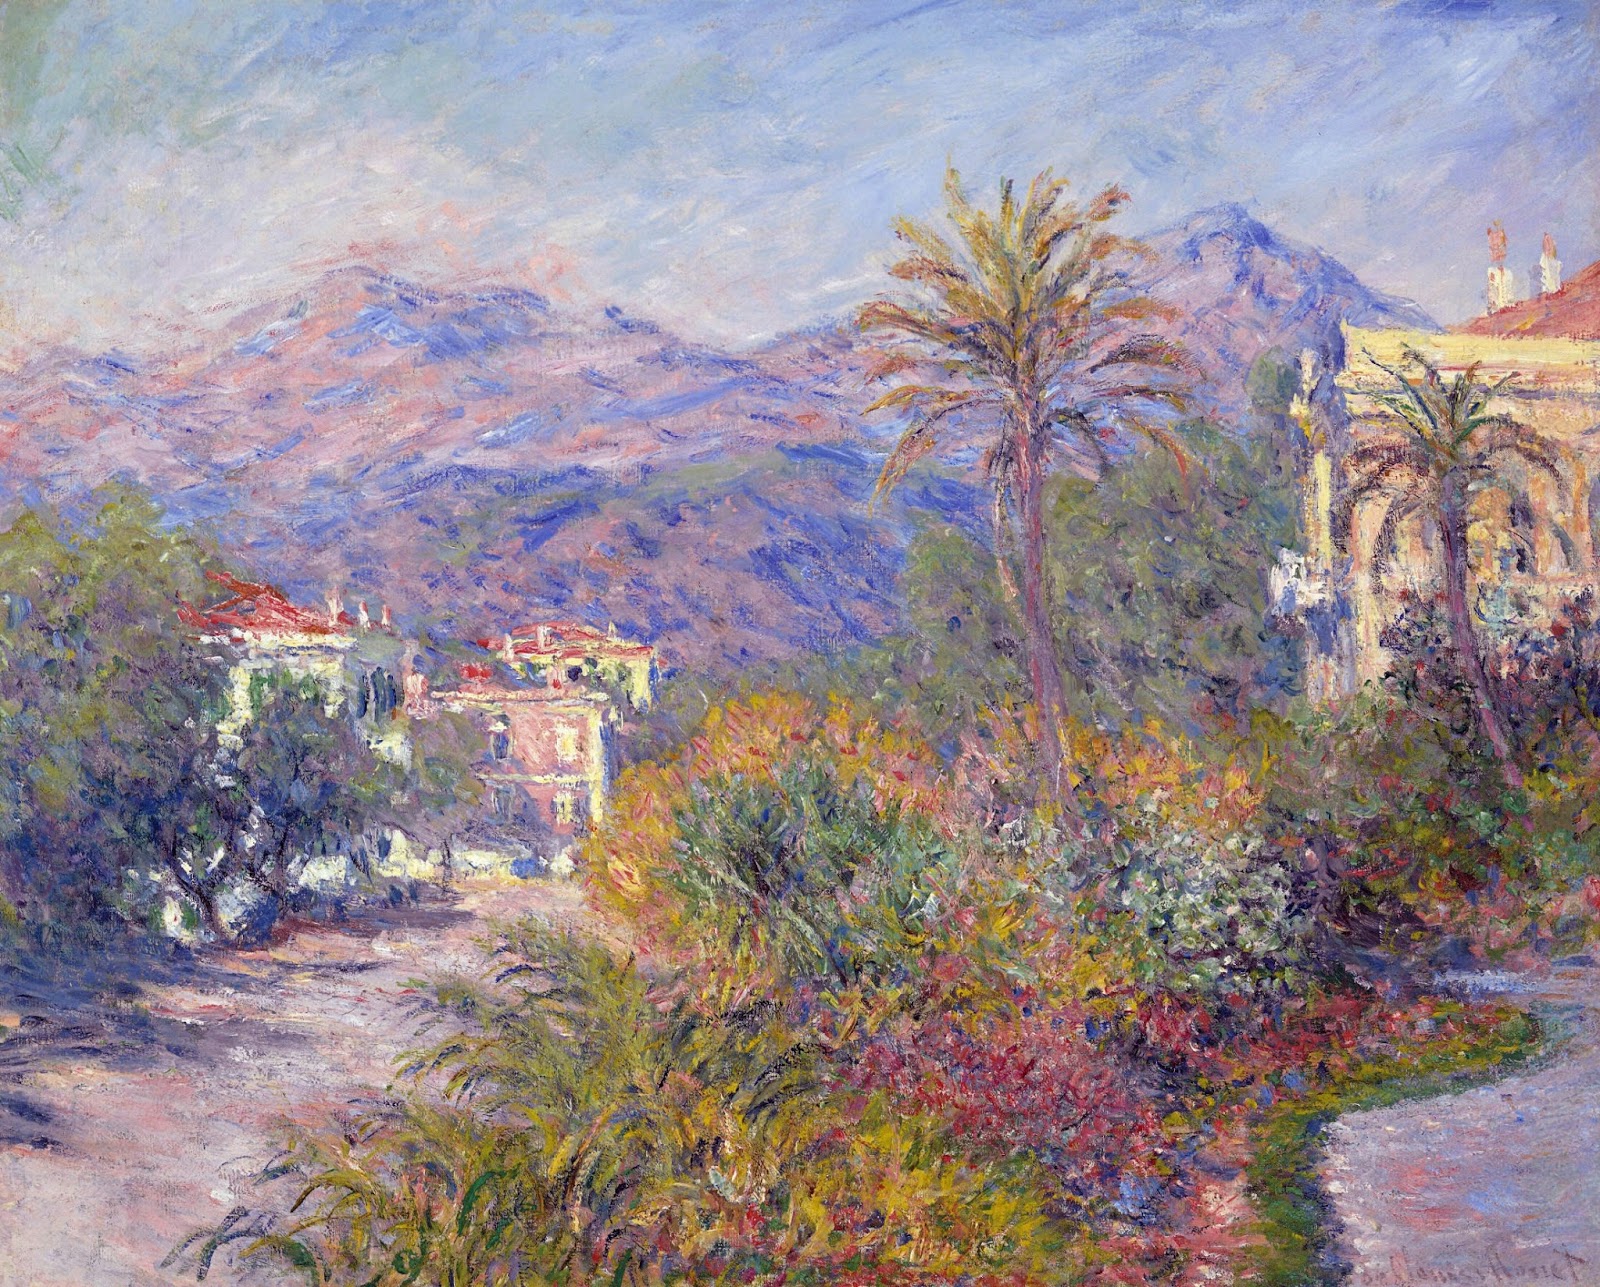 Claude+Monet-1840-1926 (713).jpg